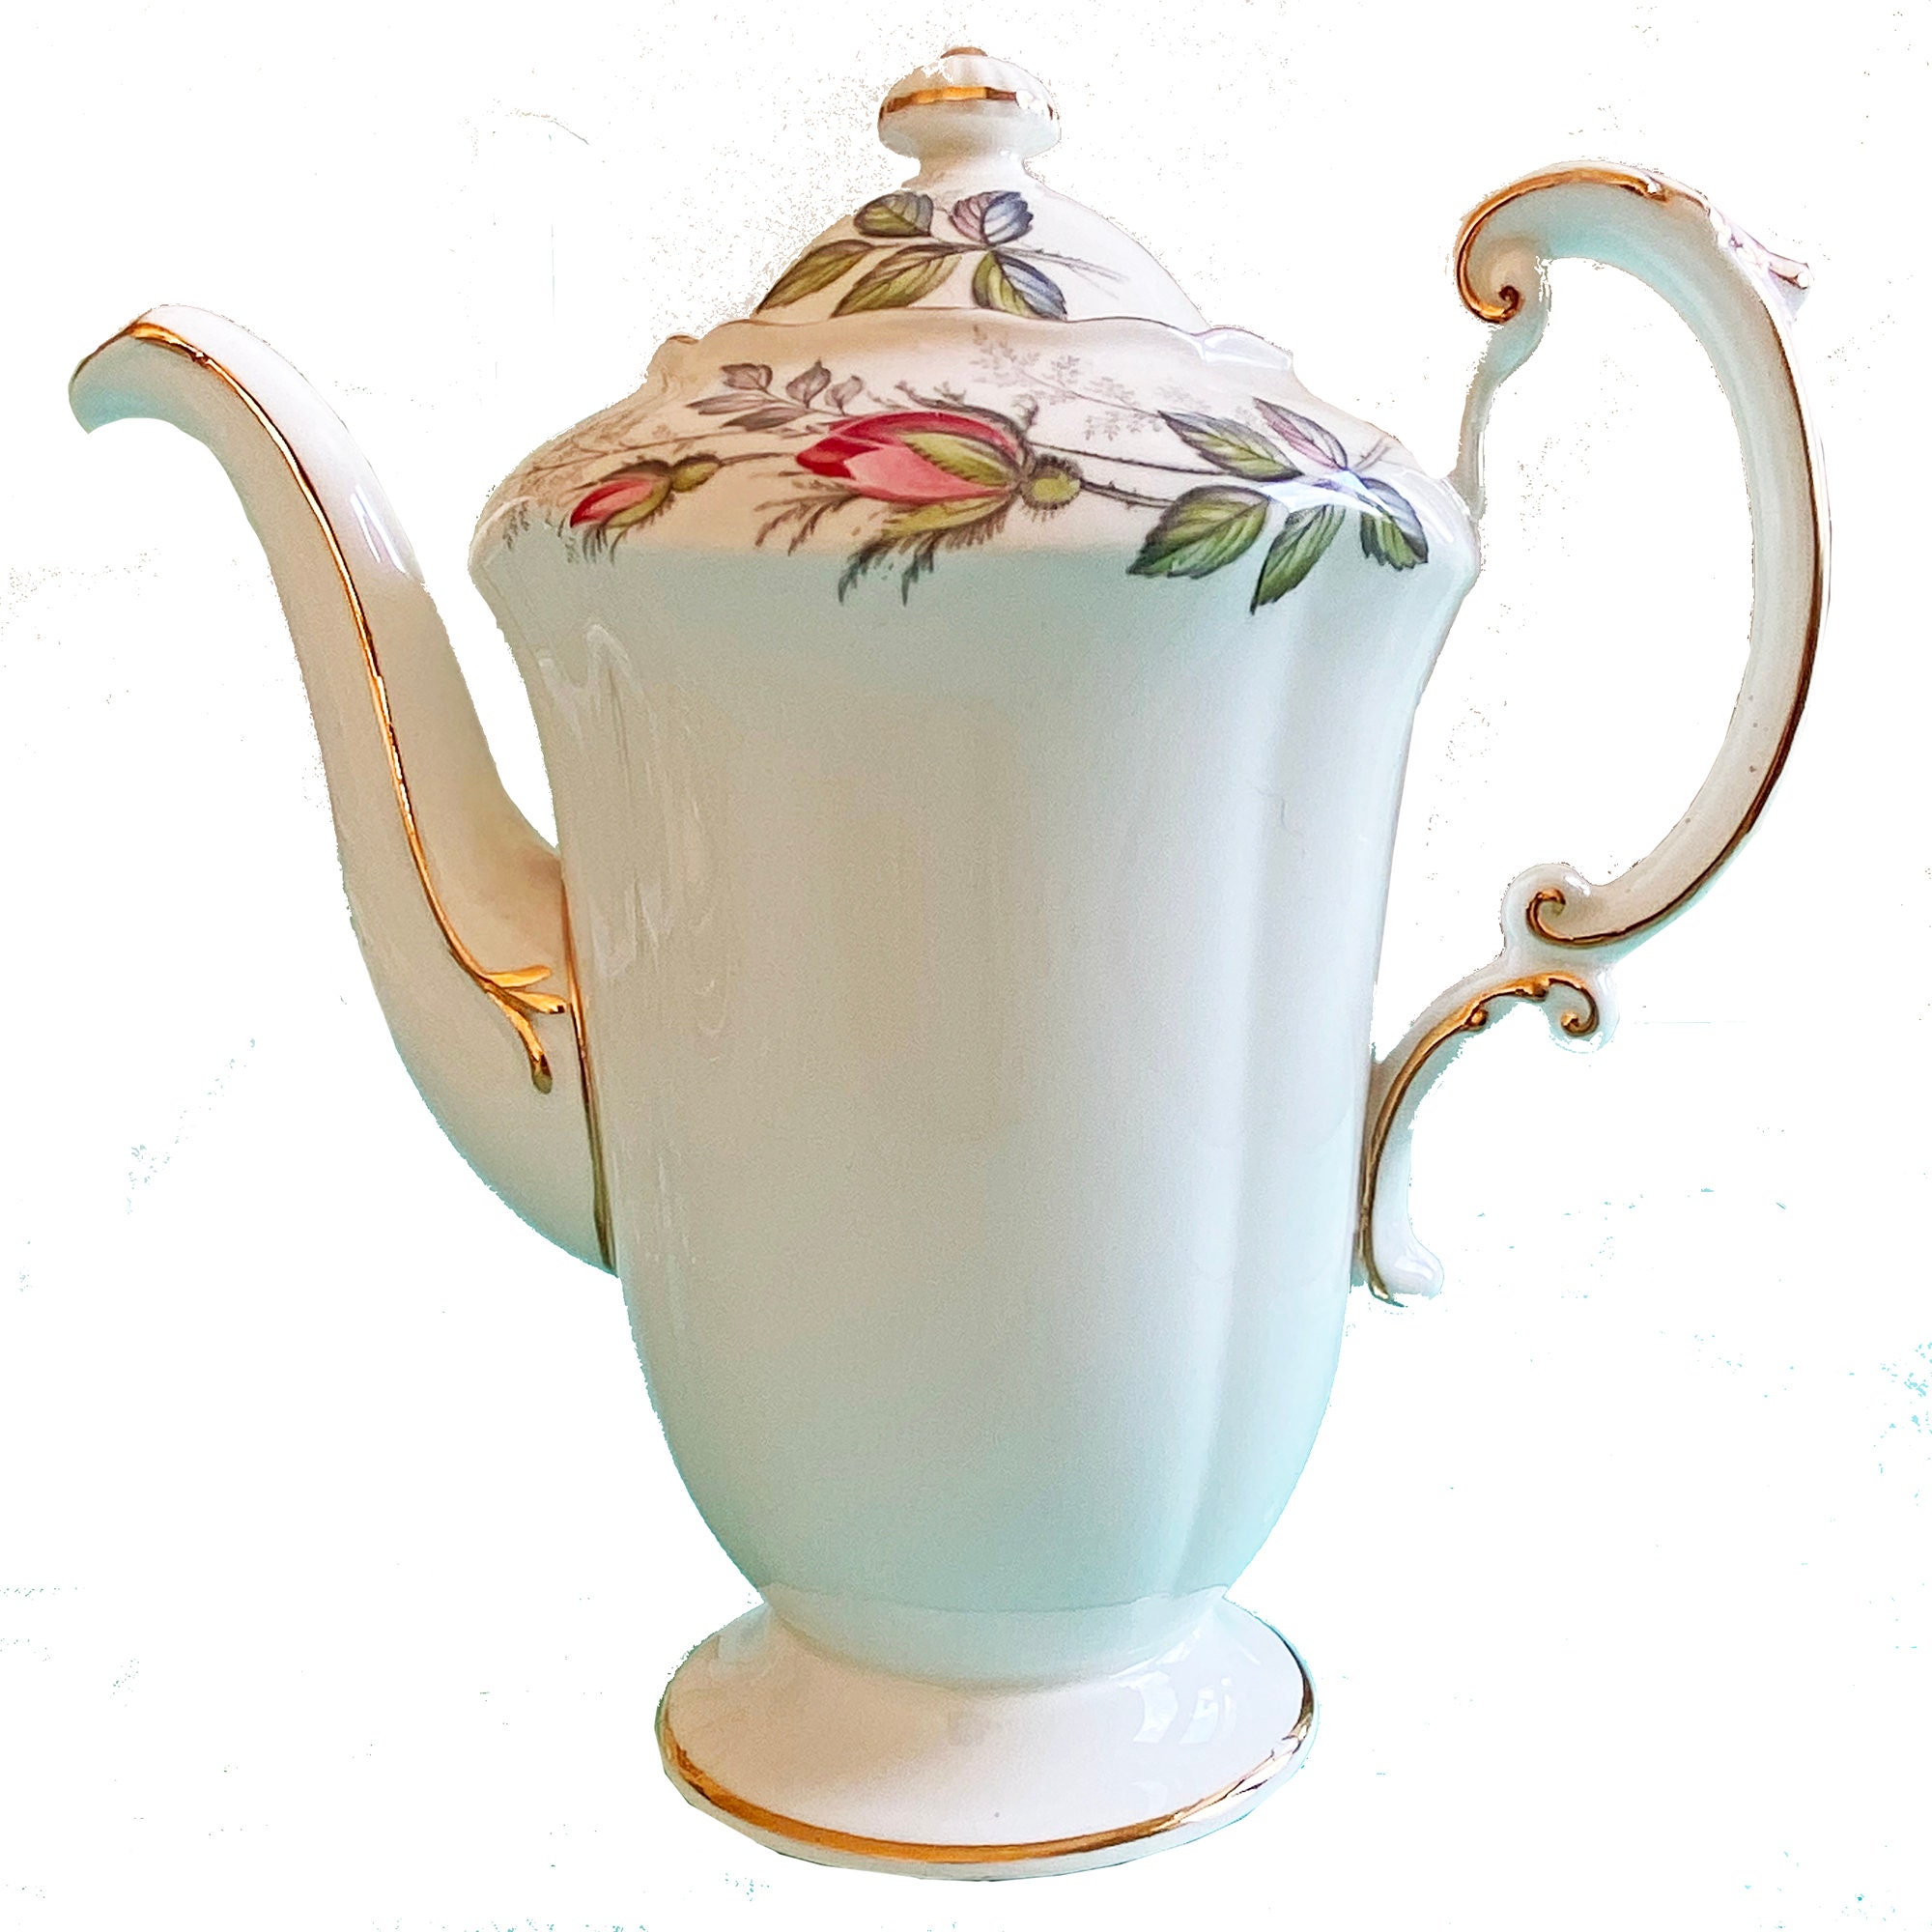 Paragon Tea Cup and Saucer England Pink Yellow Roses Gray small